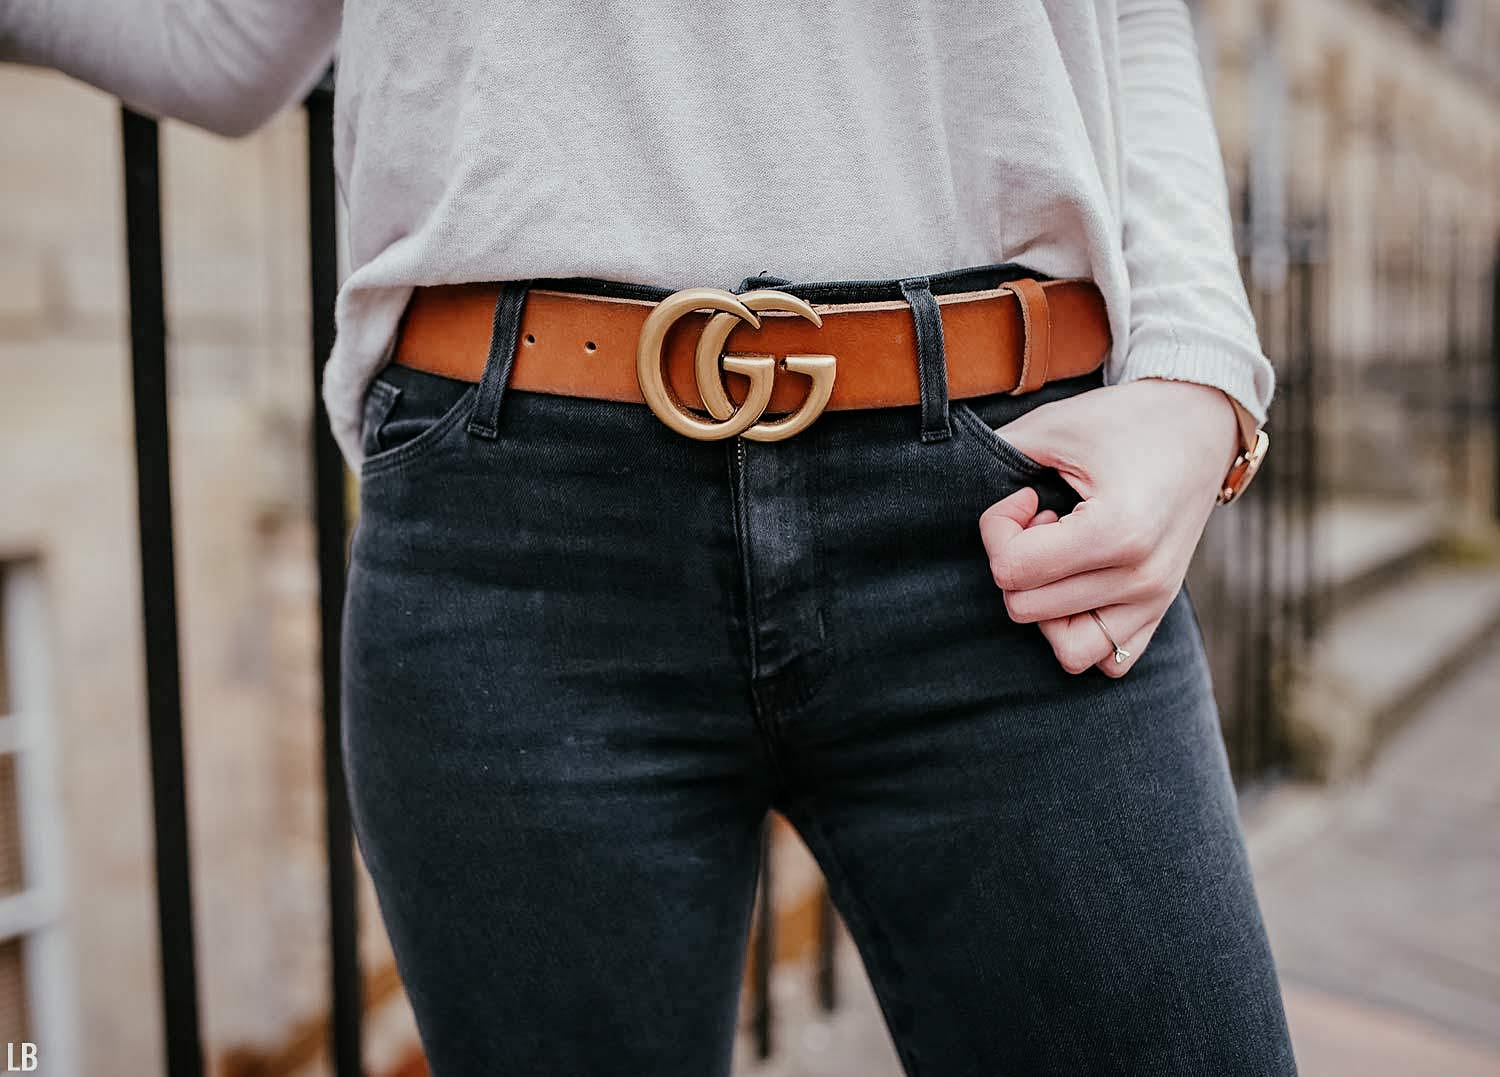 Gucci Women's GG Leather Belt